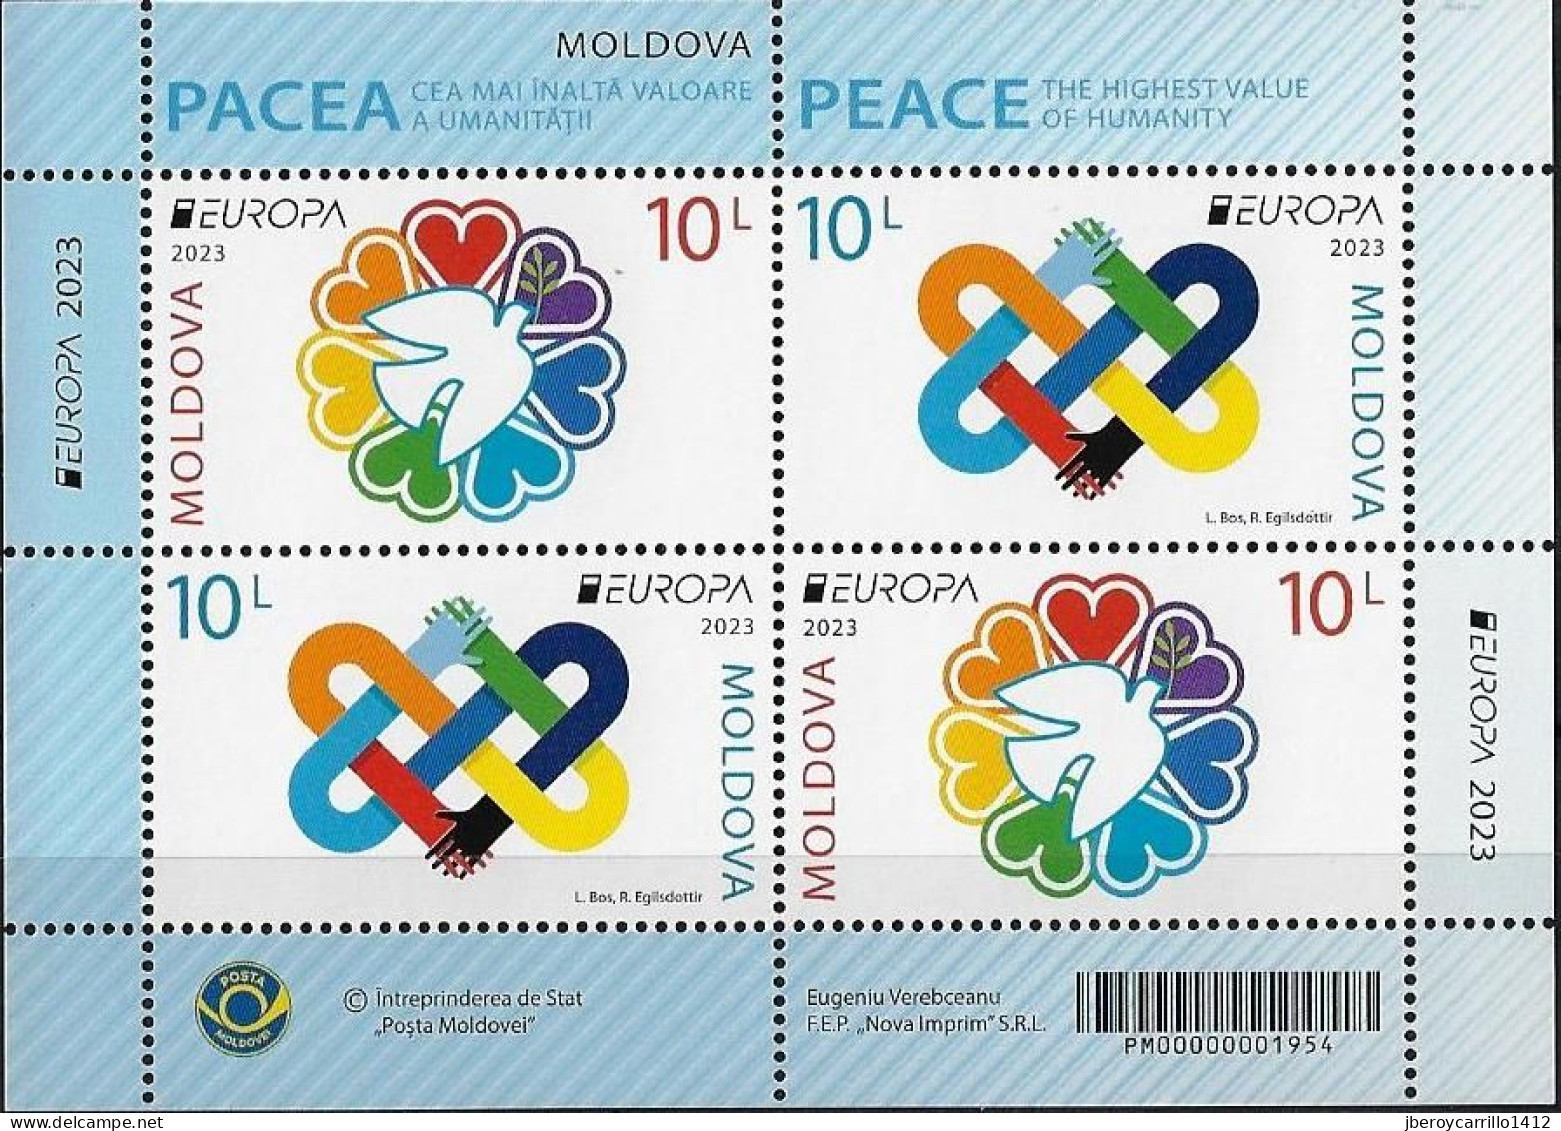 MOLDOVA /MOLDAVIA /MOLDAWIEN - EUROPA-CEPT 2023 -"PEACE -THE HIGHEST VALUE Of HUMANITY".- SOUVENIR SHEET MINT - 2023